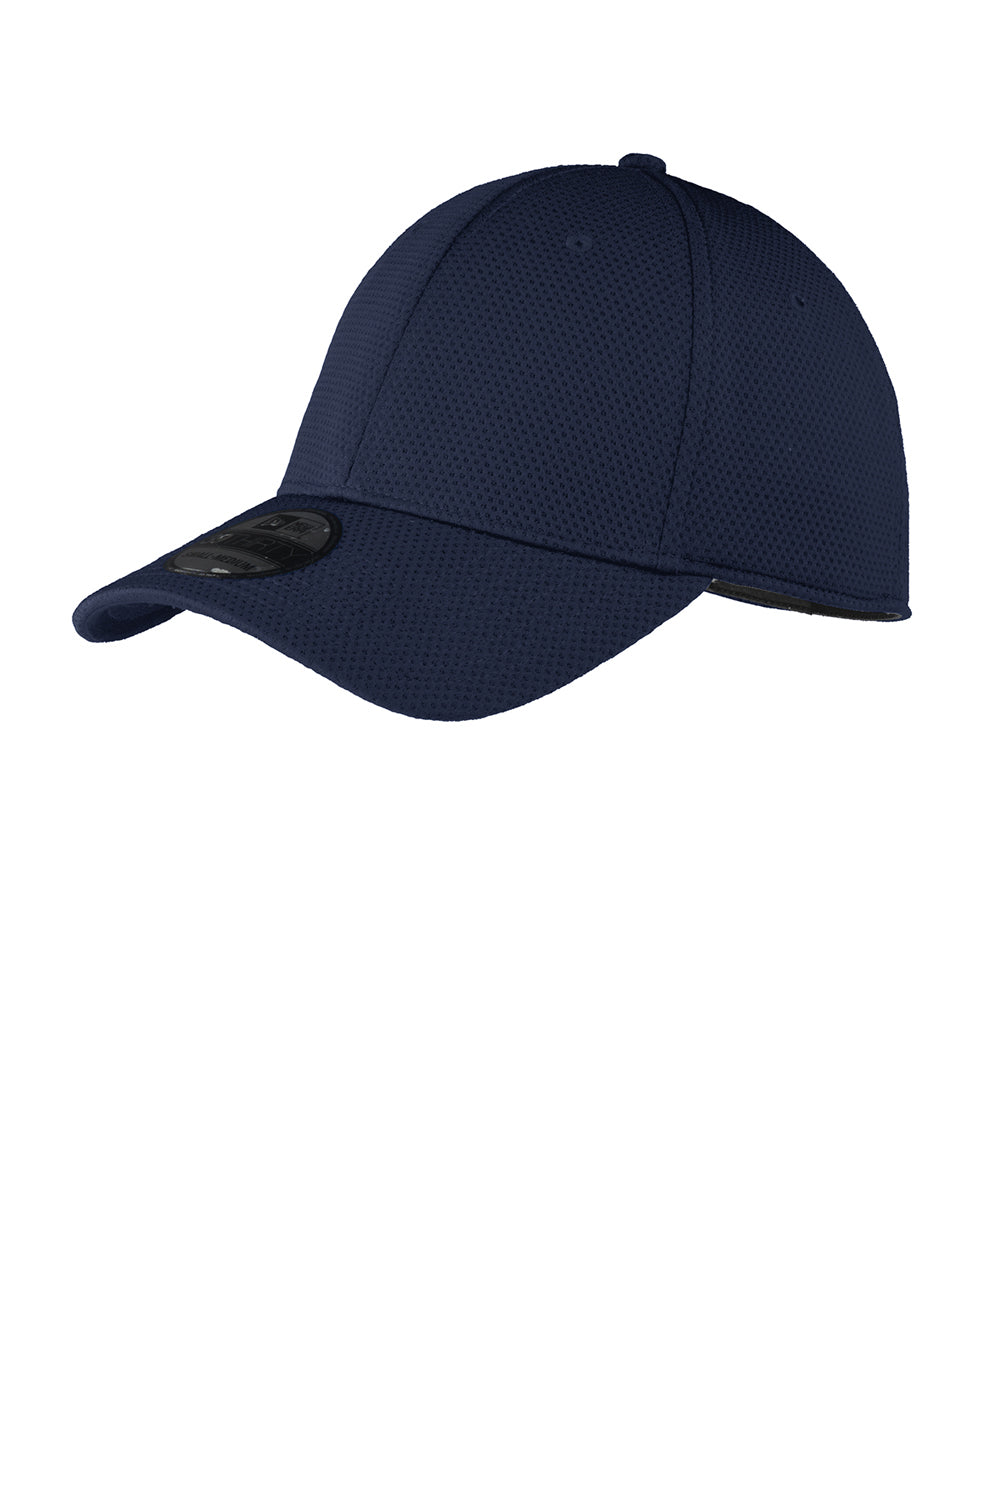 New Era NE1090 Mens Moisture Wicking Stretch Fit Hat Navy Blue Front